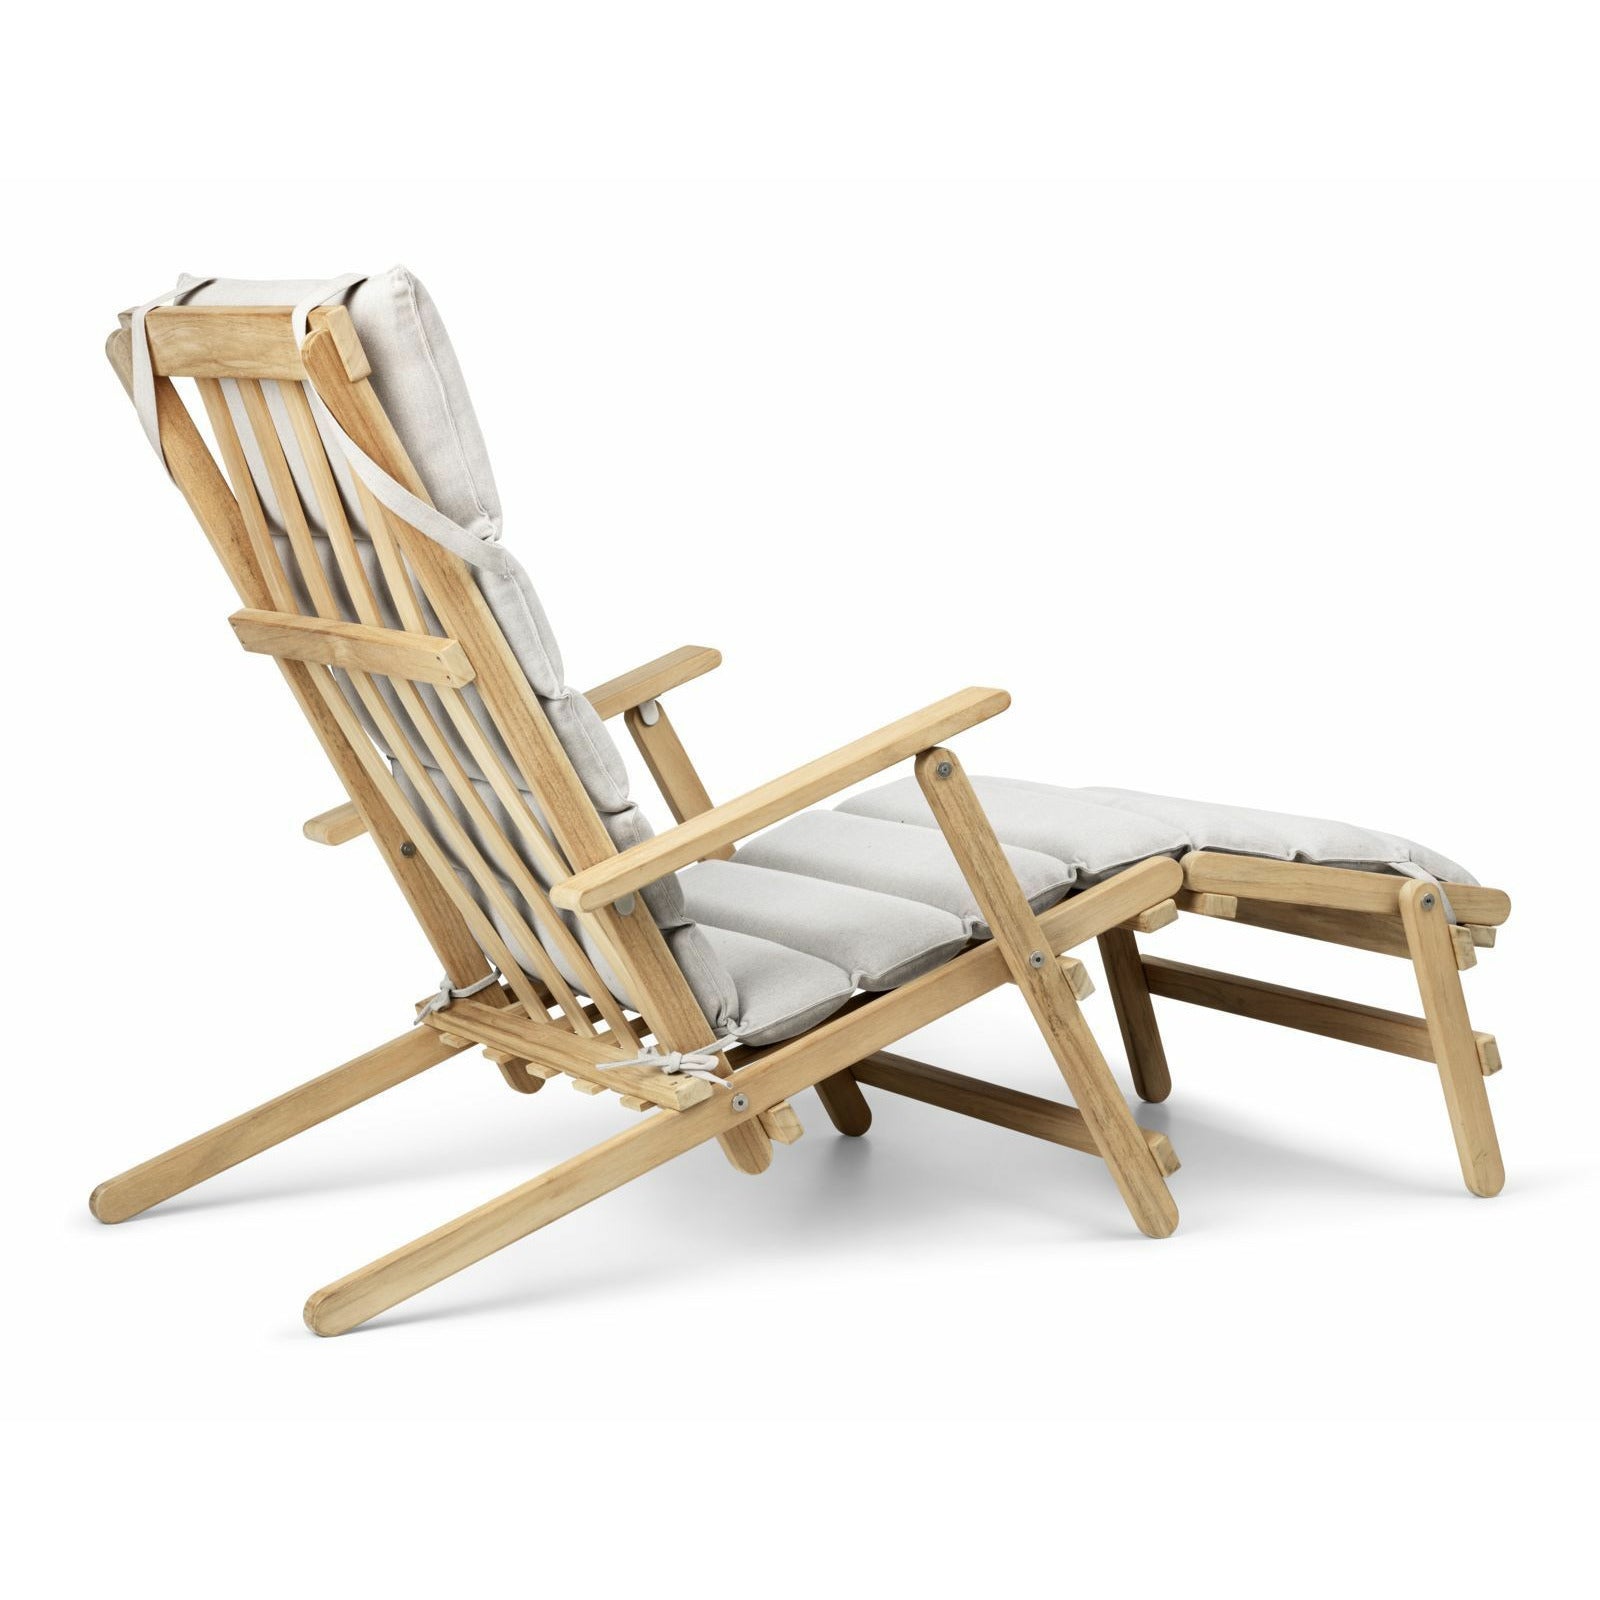 Carl Hansen Bm5565 Extended Deck Chair, Untreated Teak